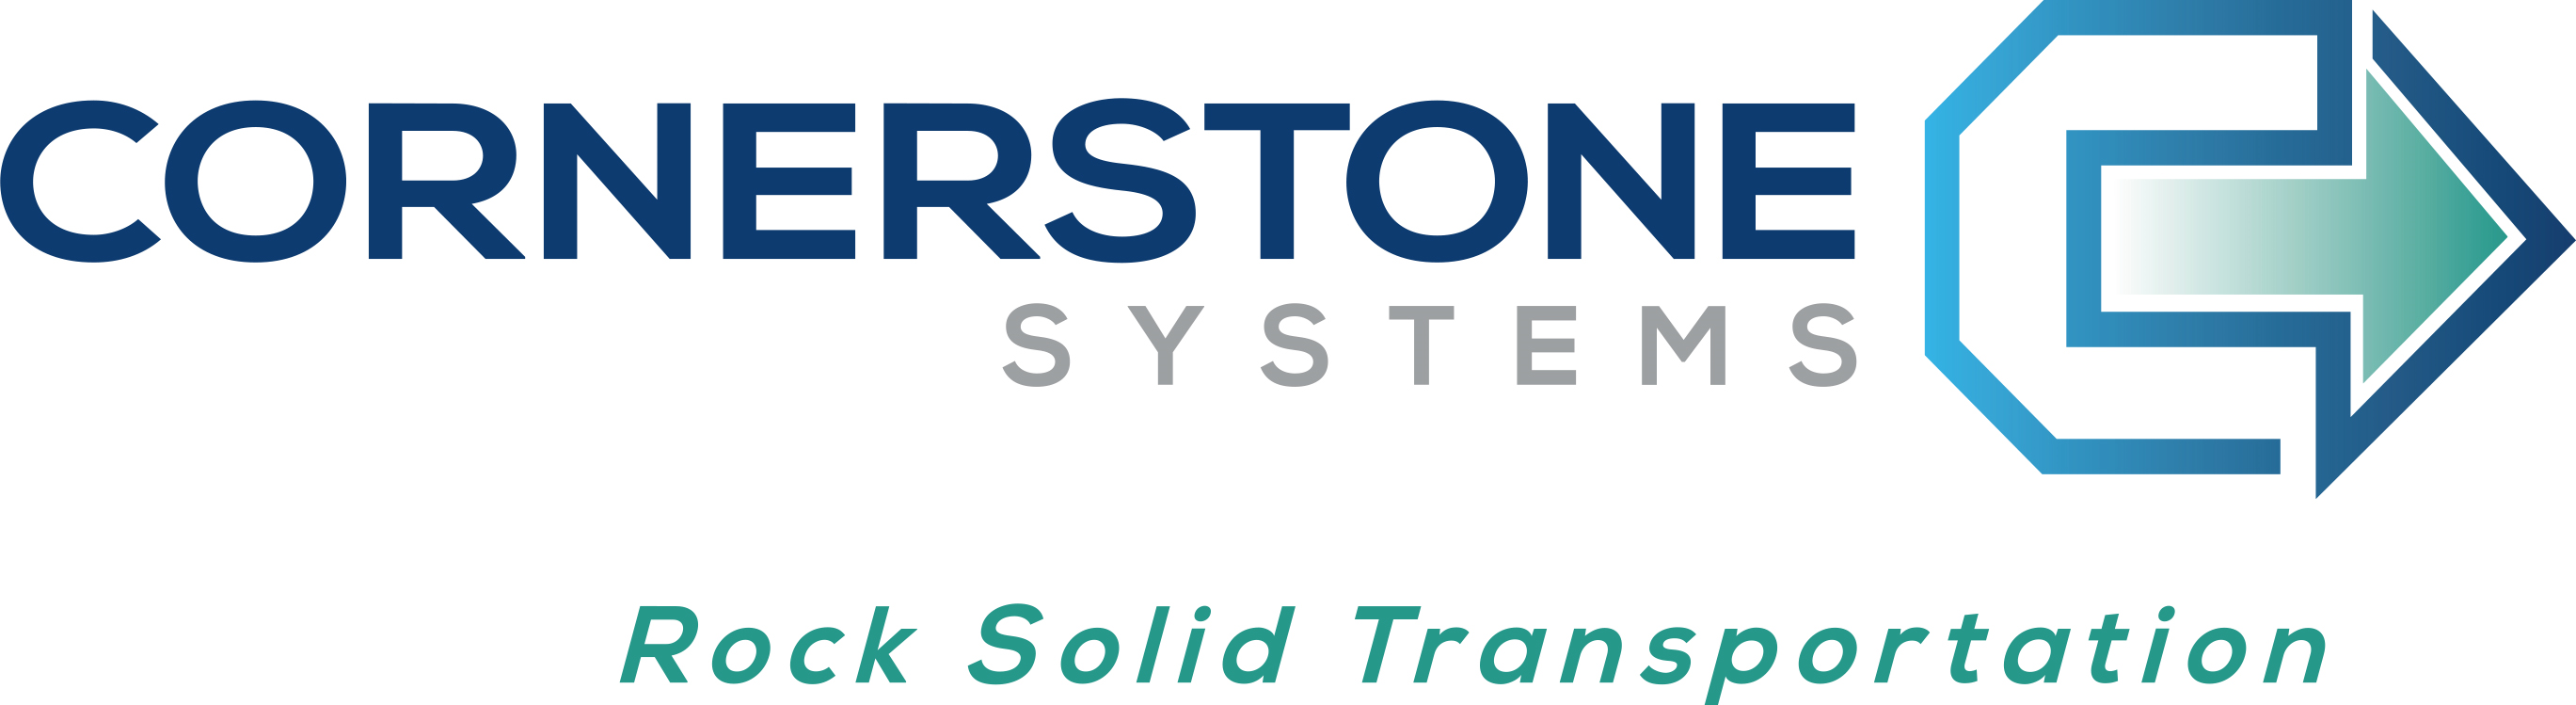 Cornerstone Systems logo